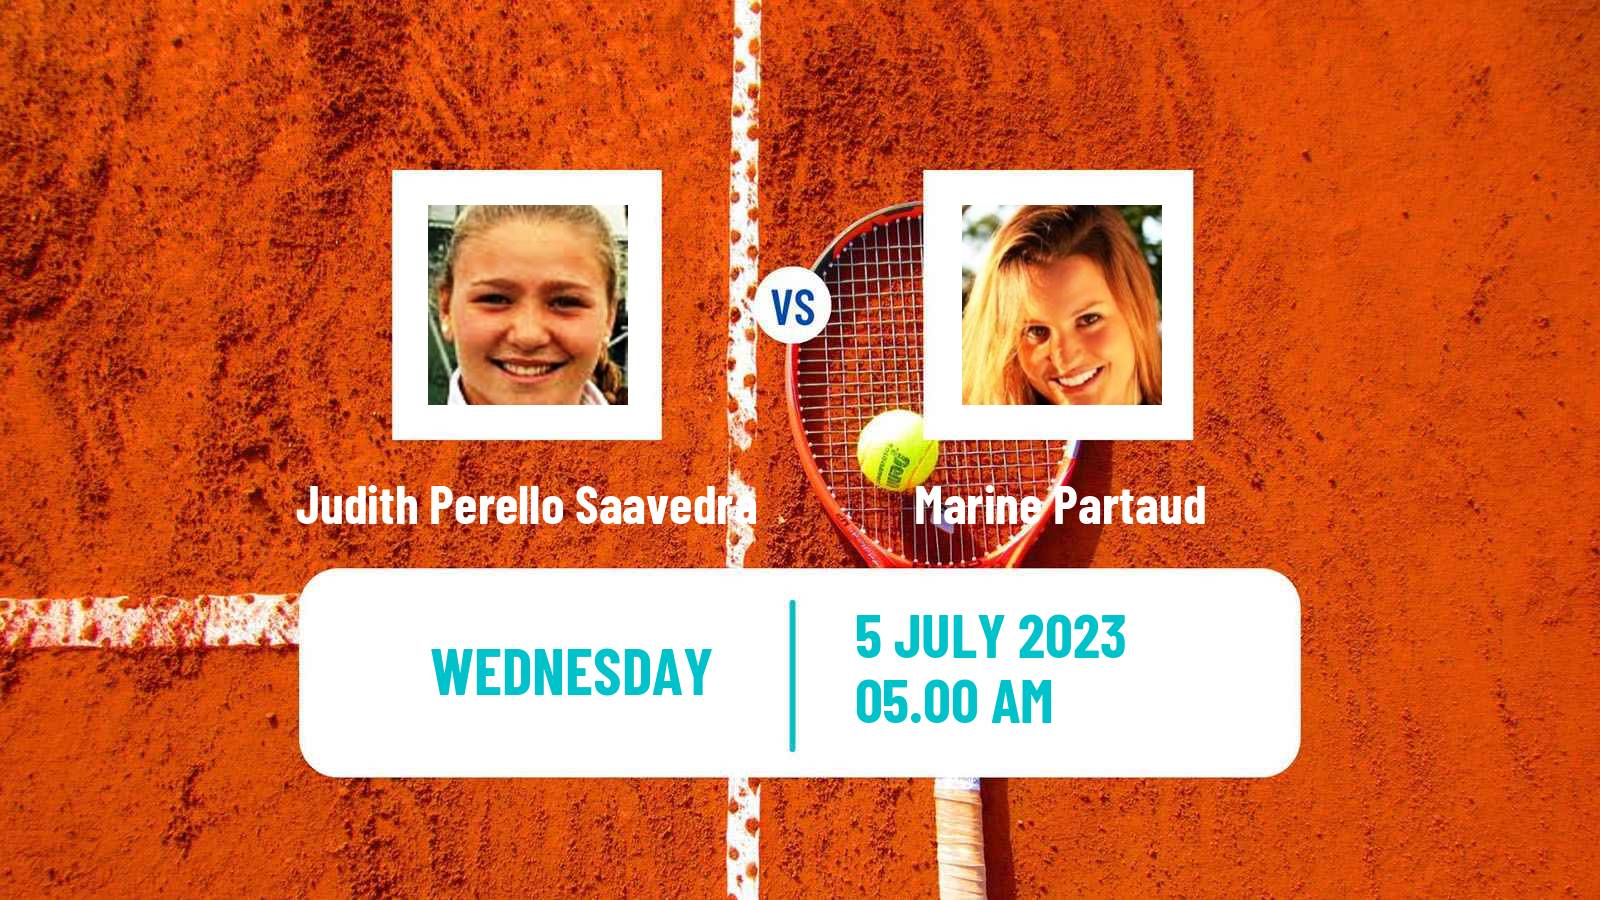 Tennis ITF W25 Getxo Women Judith Perello Saavedra - Marine Partaud